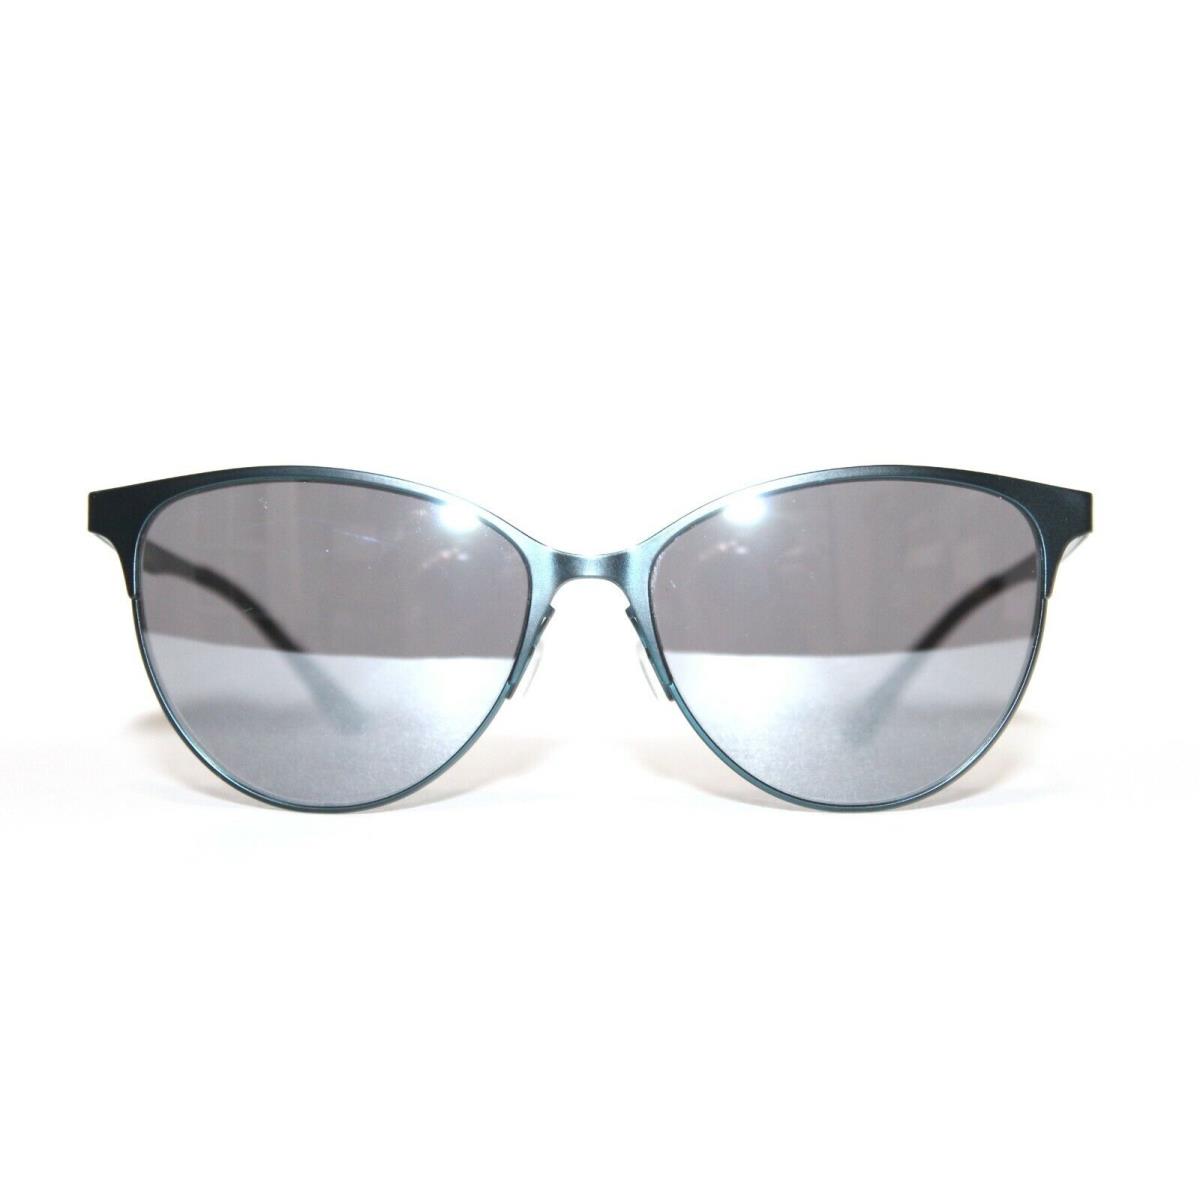 Adidas AOM002 026.000 Blue Mirrored Sunglasses 55-15-140 W/ Case